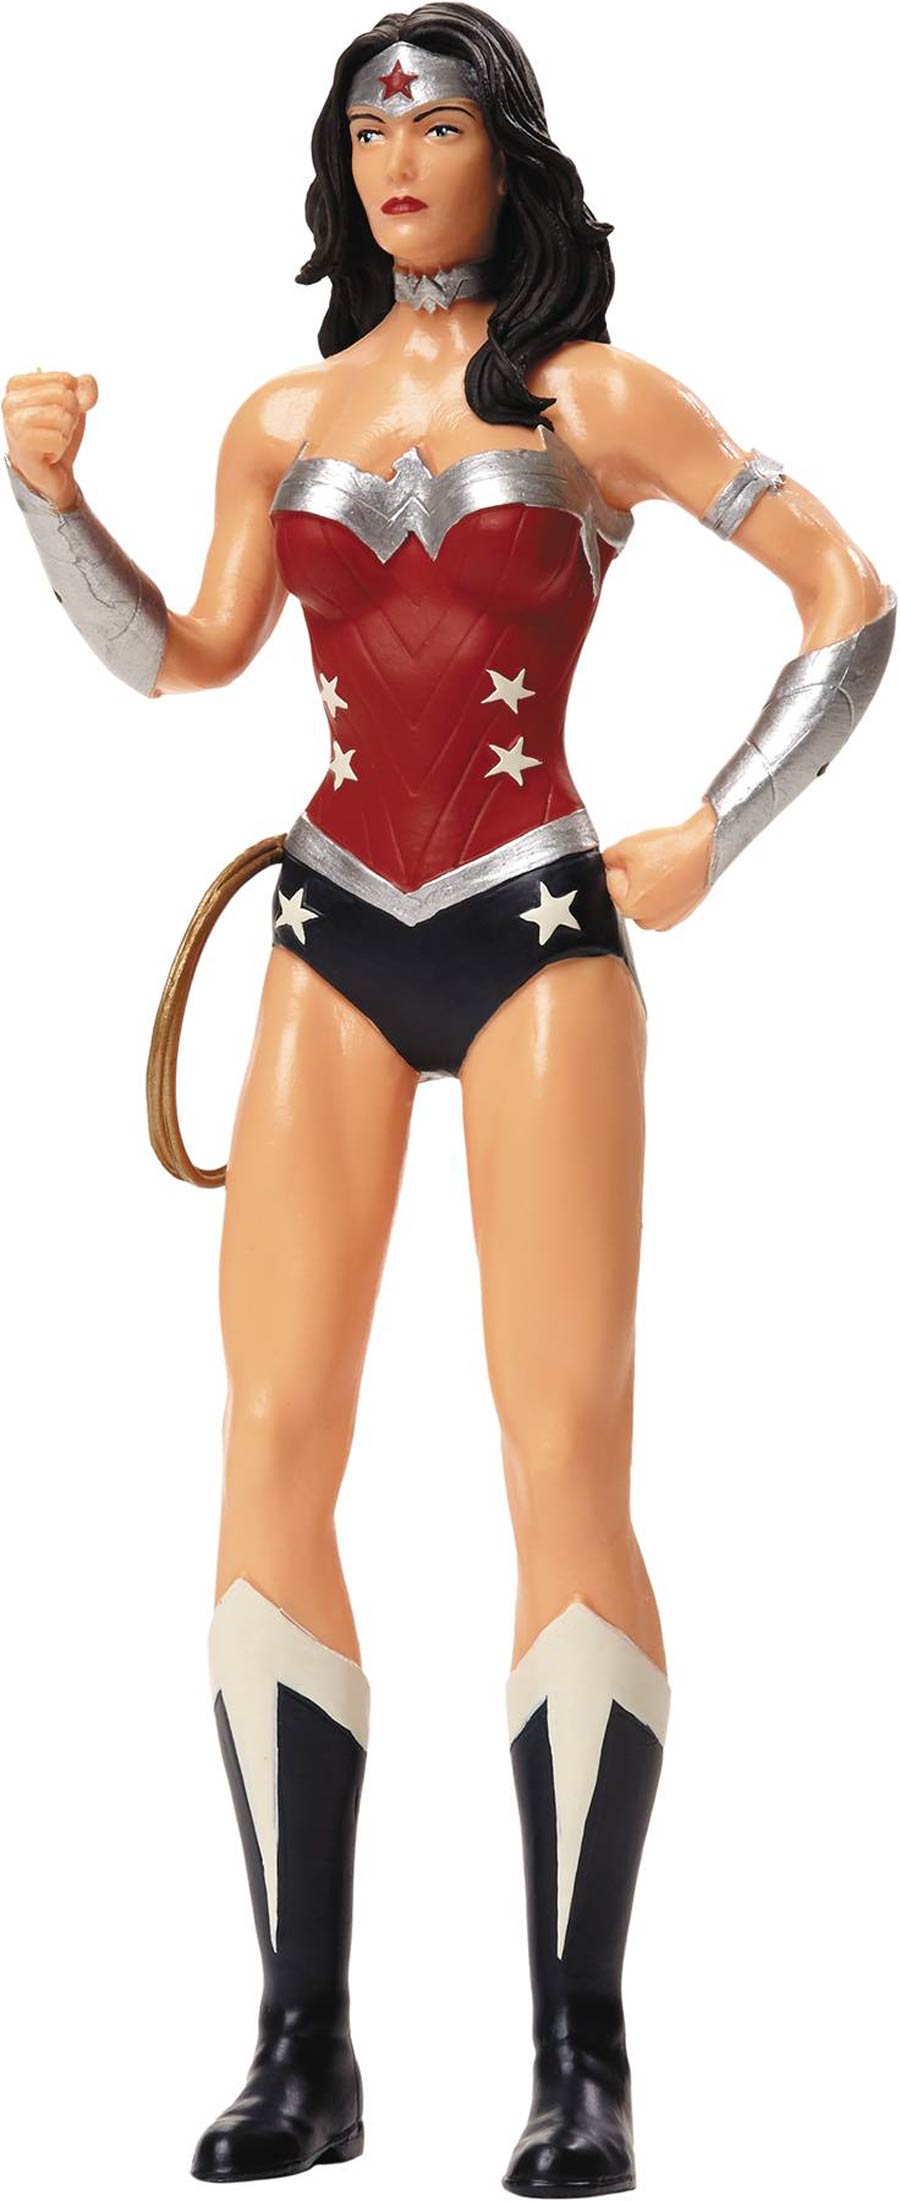 Justice League New 52 Wonder Woman 8-inch Bendable Figure